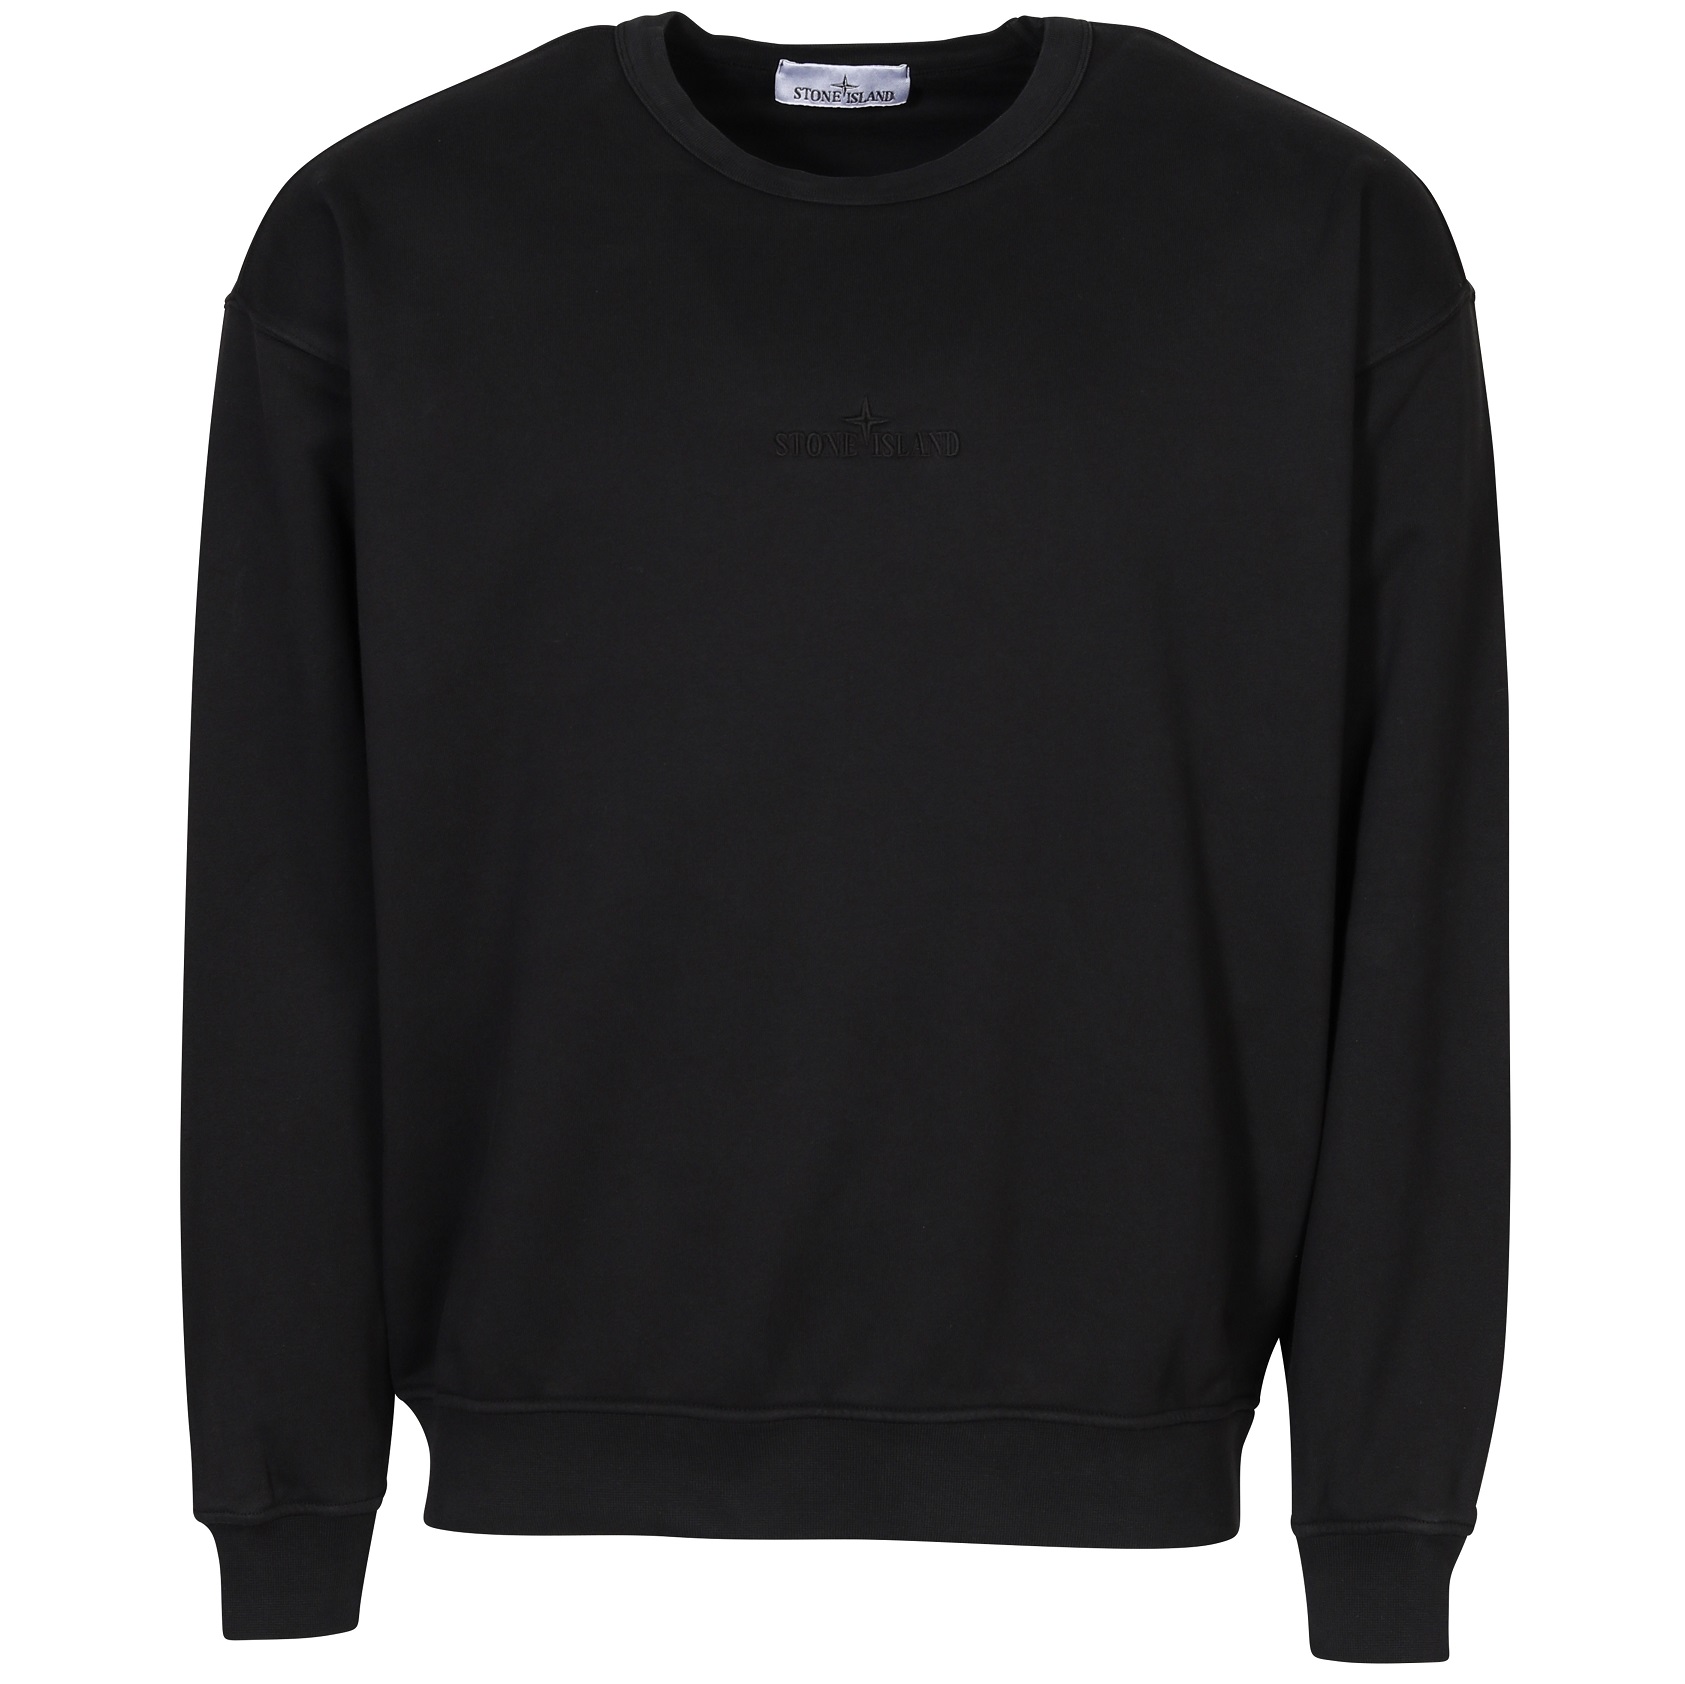 STONE ISLAND Oversize Stamp Sweatshirt in Black 3XL